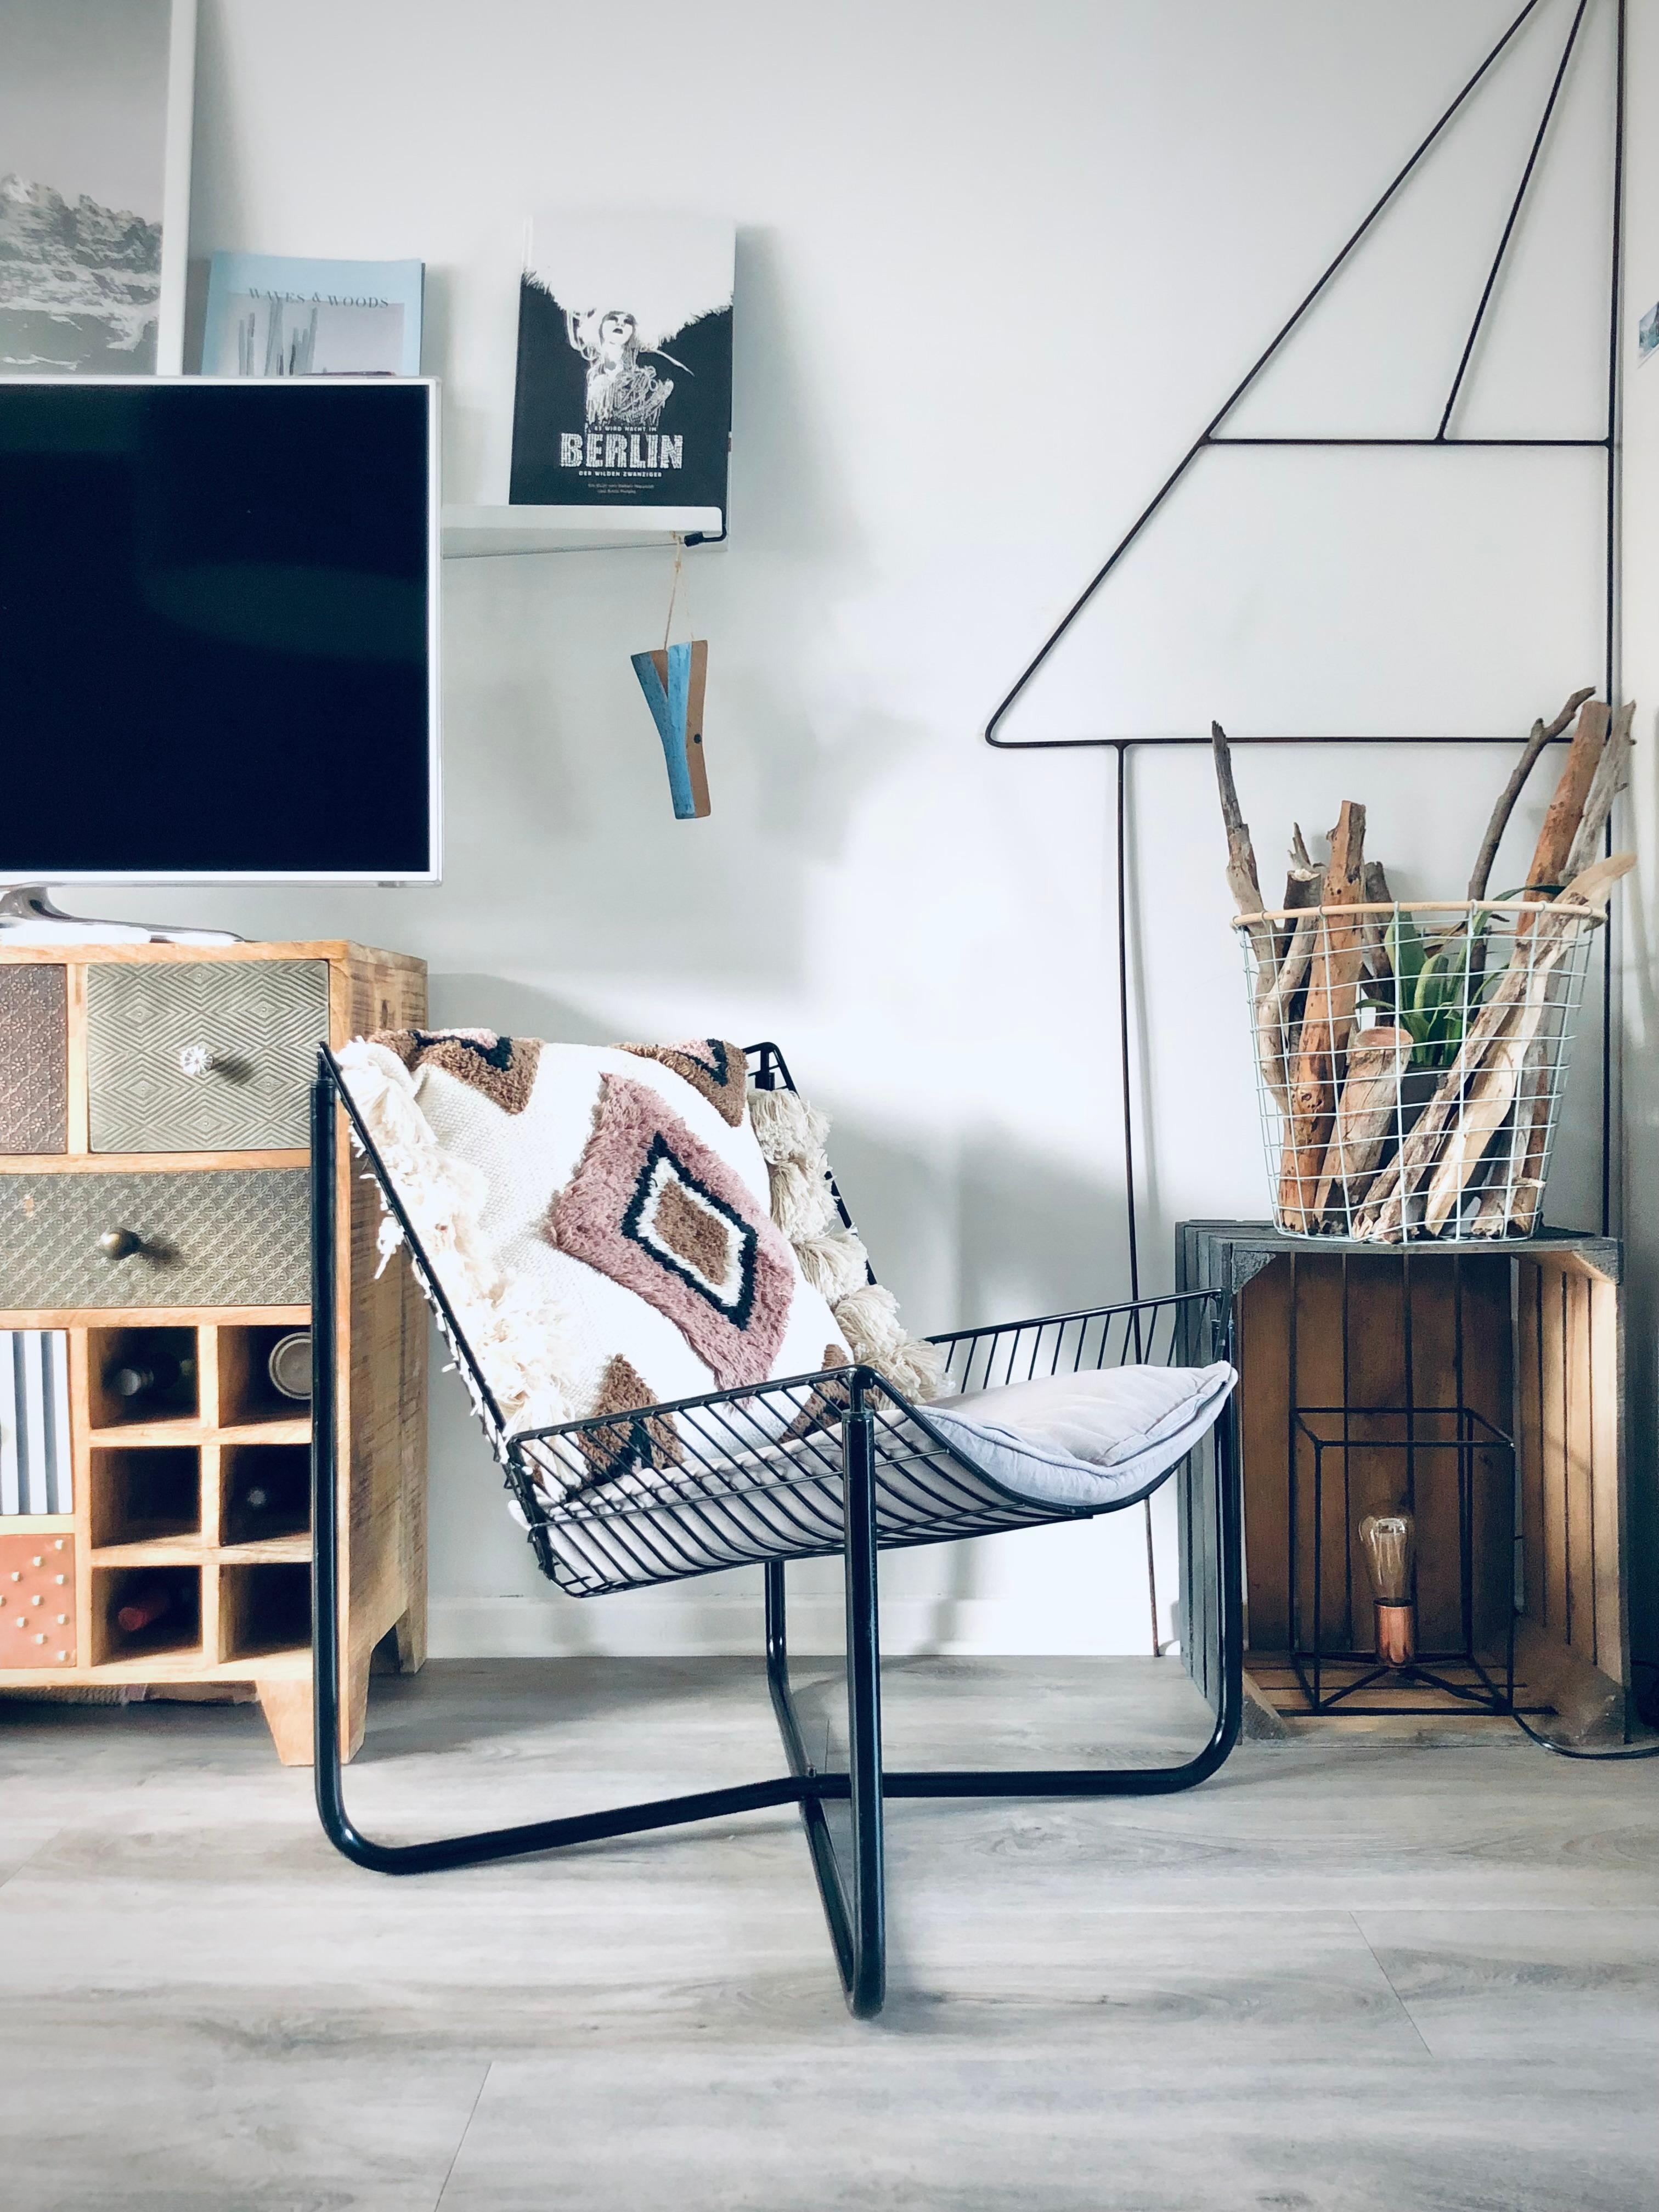 Der schalenförmige #ikea JÄRPEN Sessel von Niels Gammelgaard – Klassiker. #obstkiste #livingroom #bohostyle #sesselliebe #hygge #cosyliving #wasduliebst